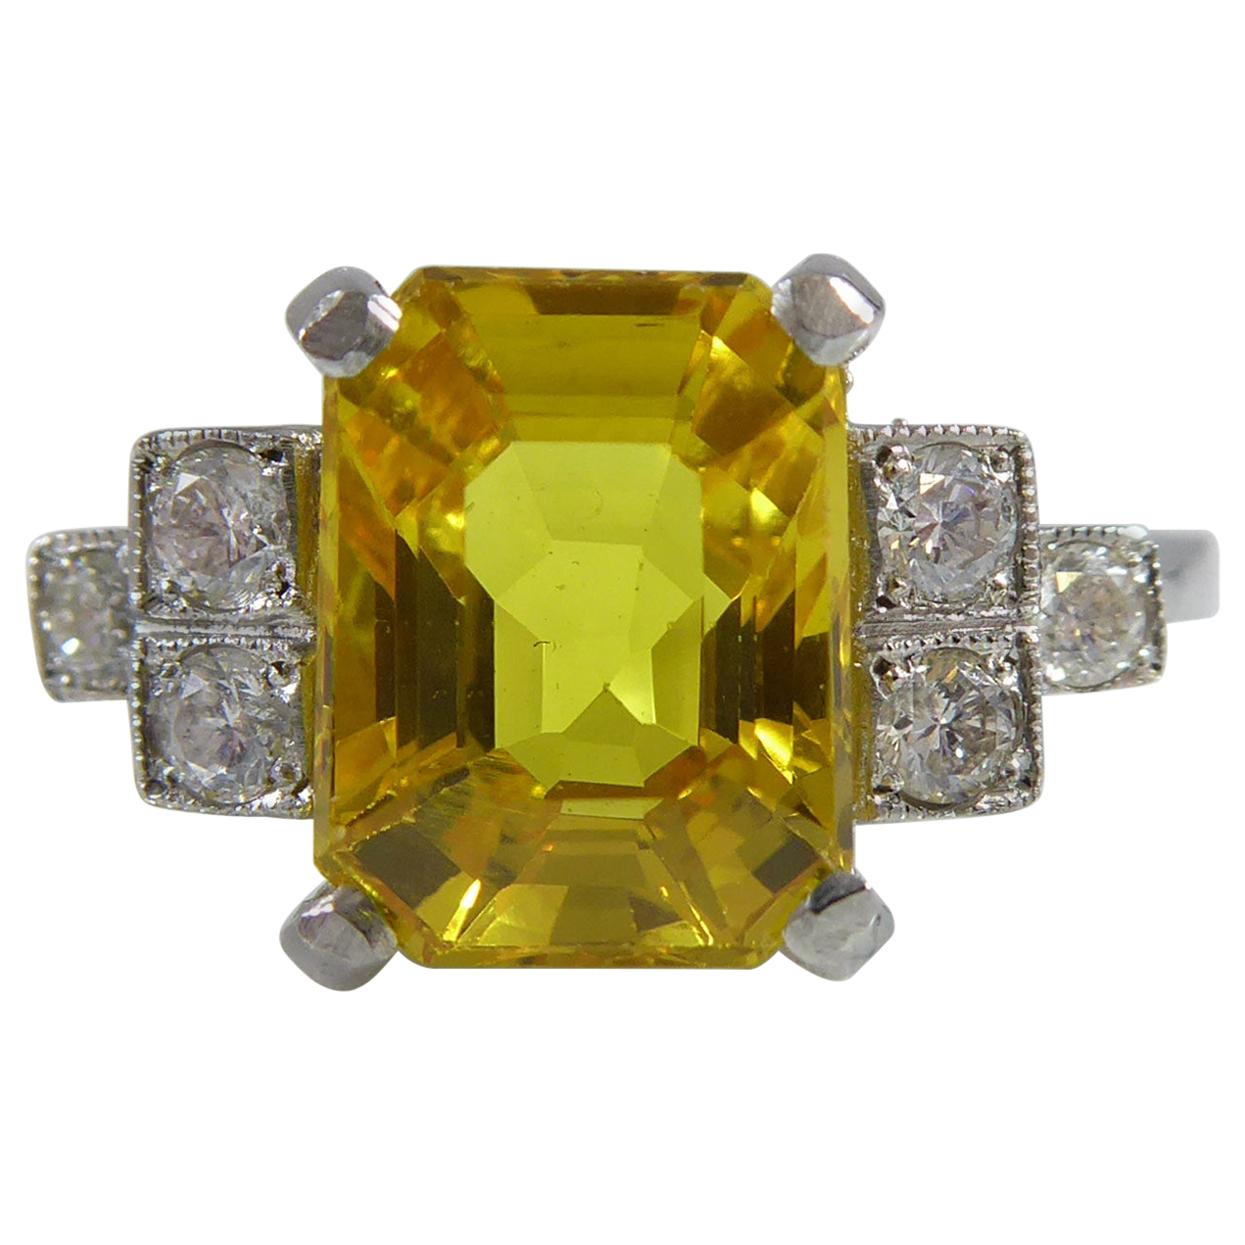 Art Deco Style 2.87 Carat Yellow Sapphire and Diamond Ring, Contemporary Design